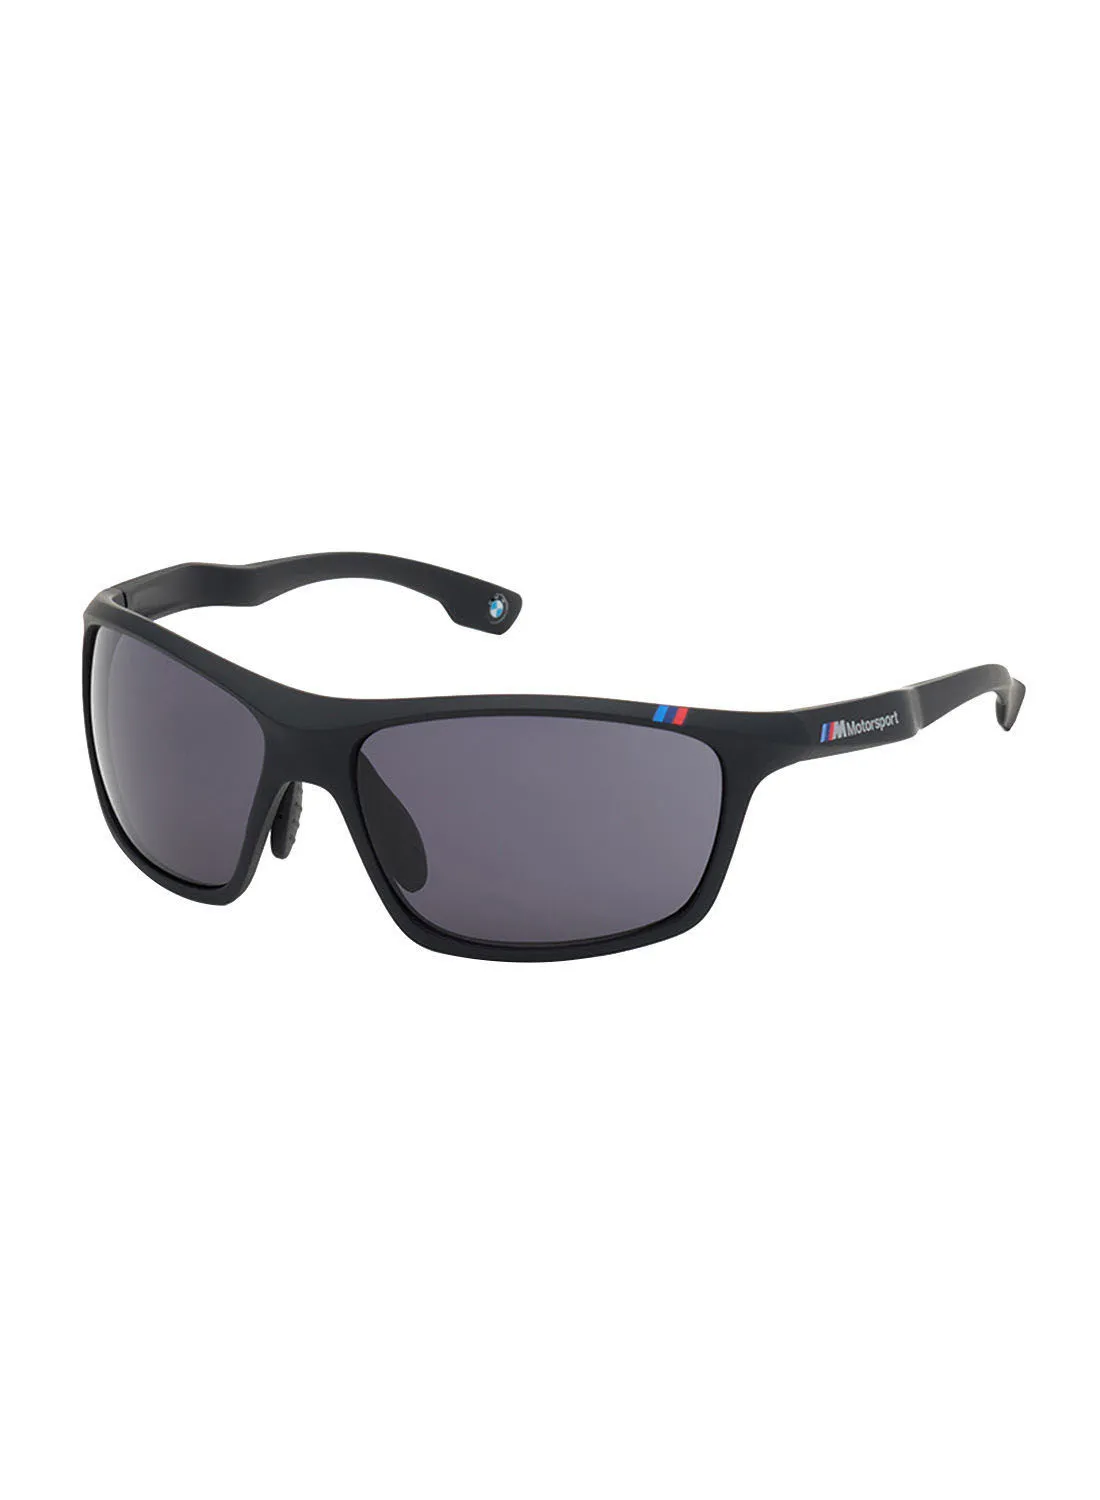 BMW Men's Sunglasses BS000602A62